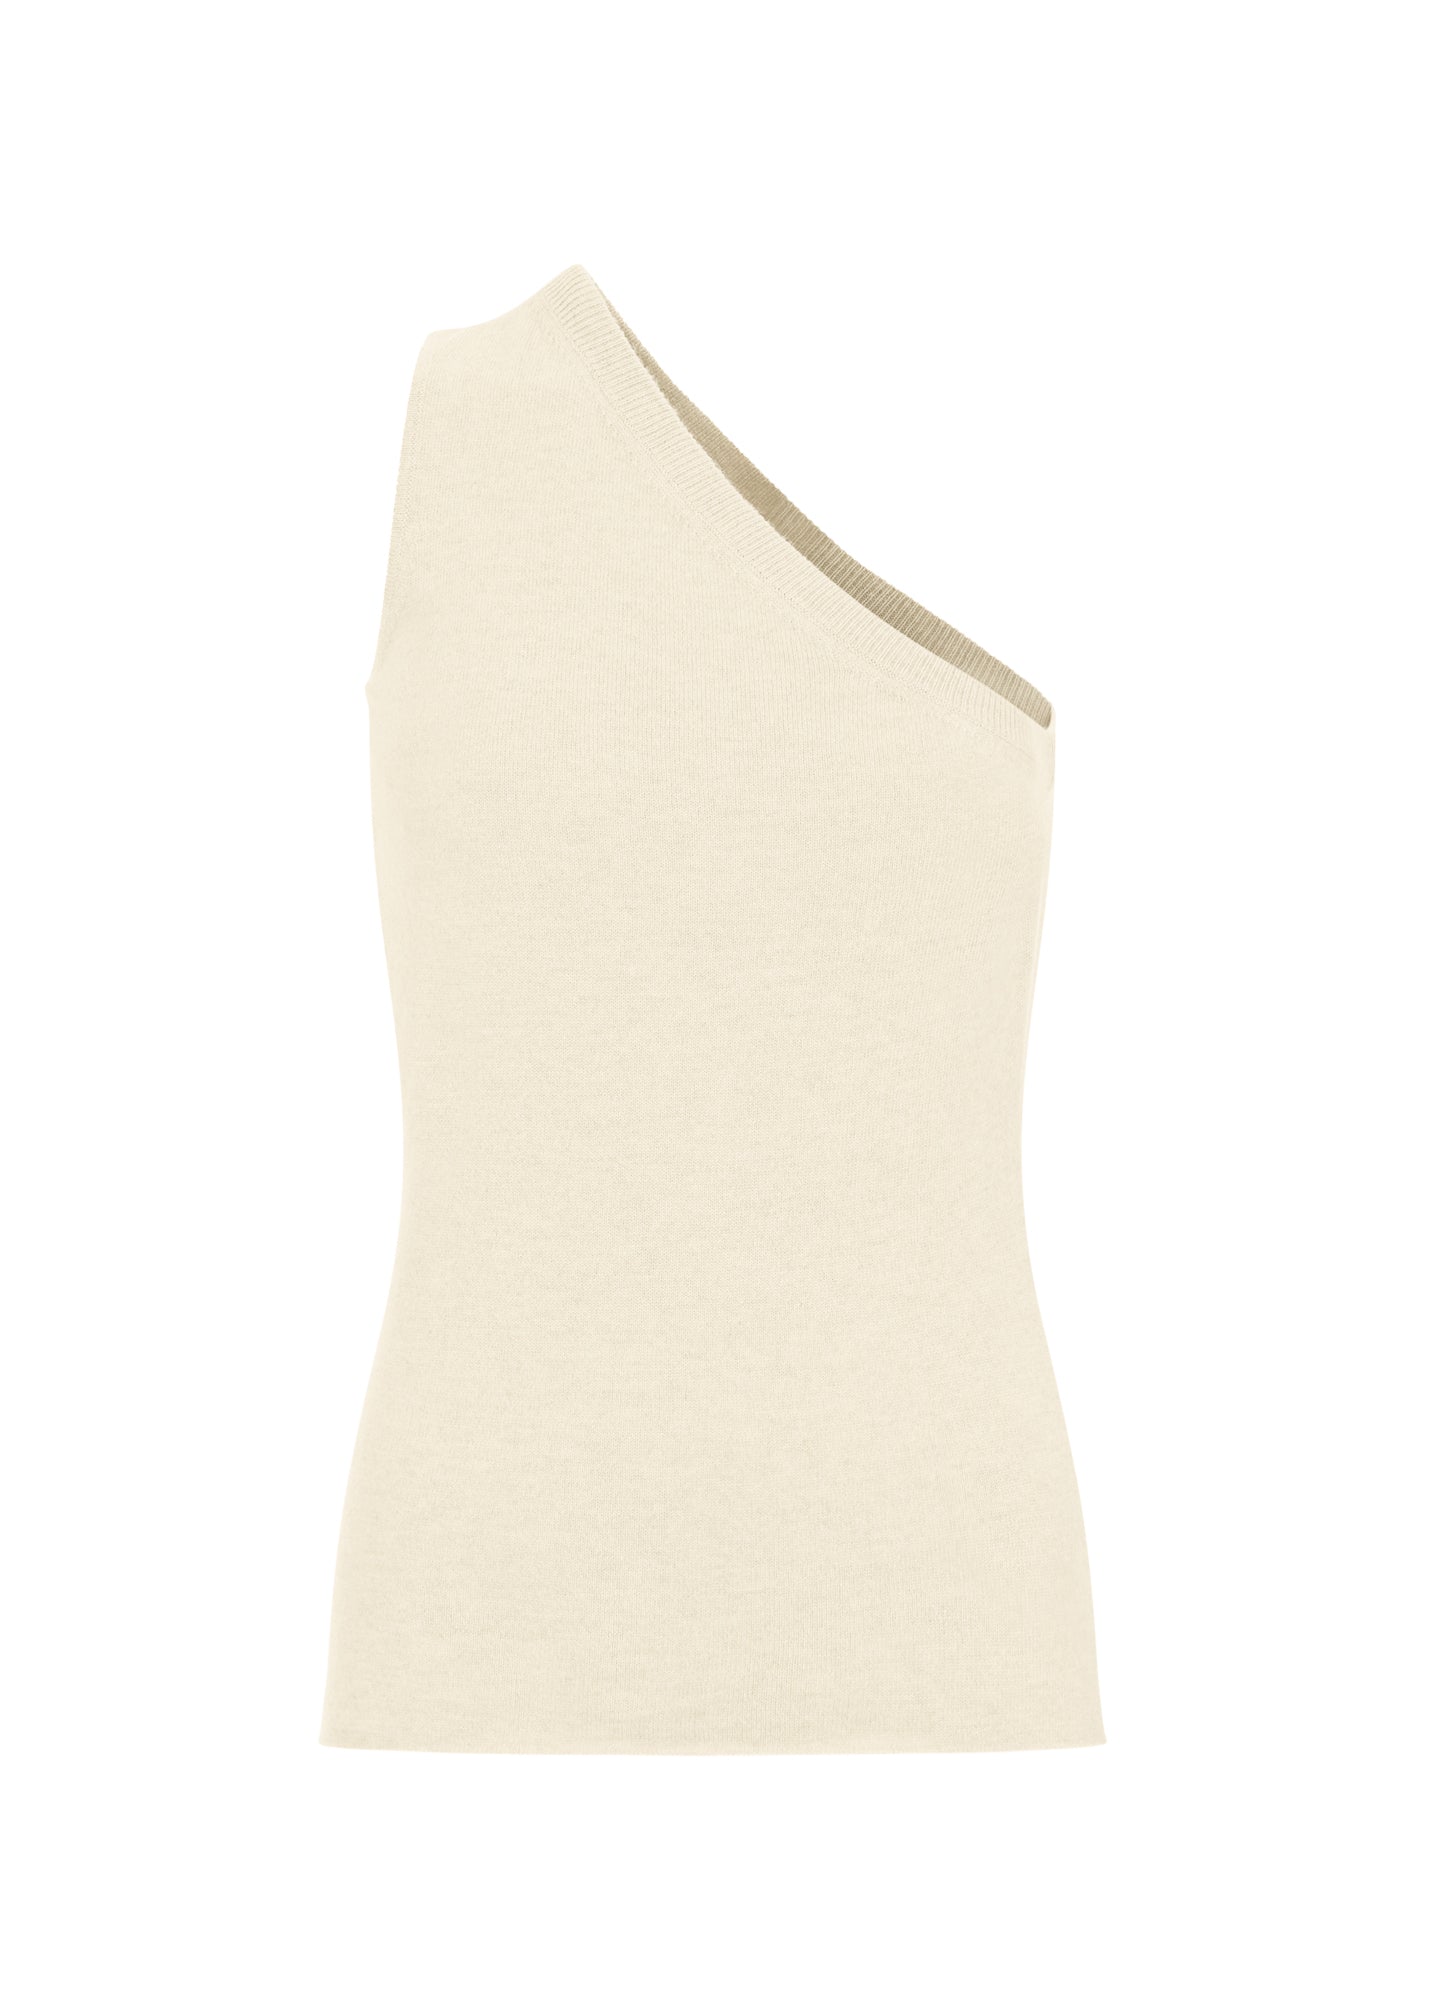 Designer cashmere asymmetrical one shoulder sleeveless top Cream